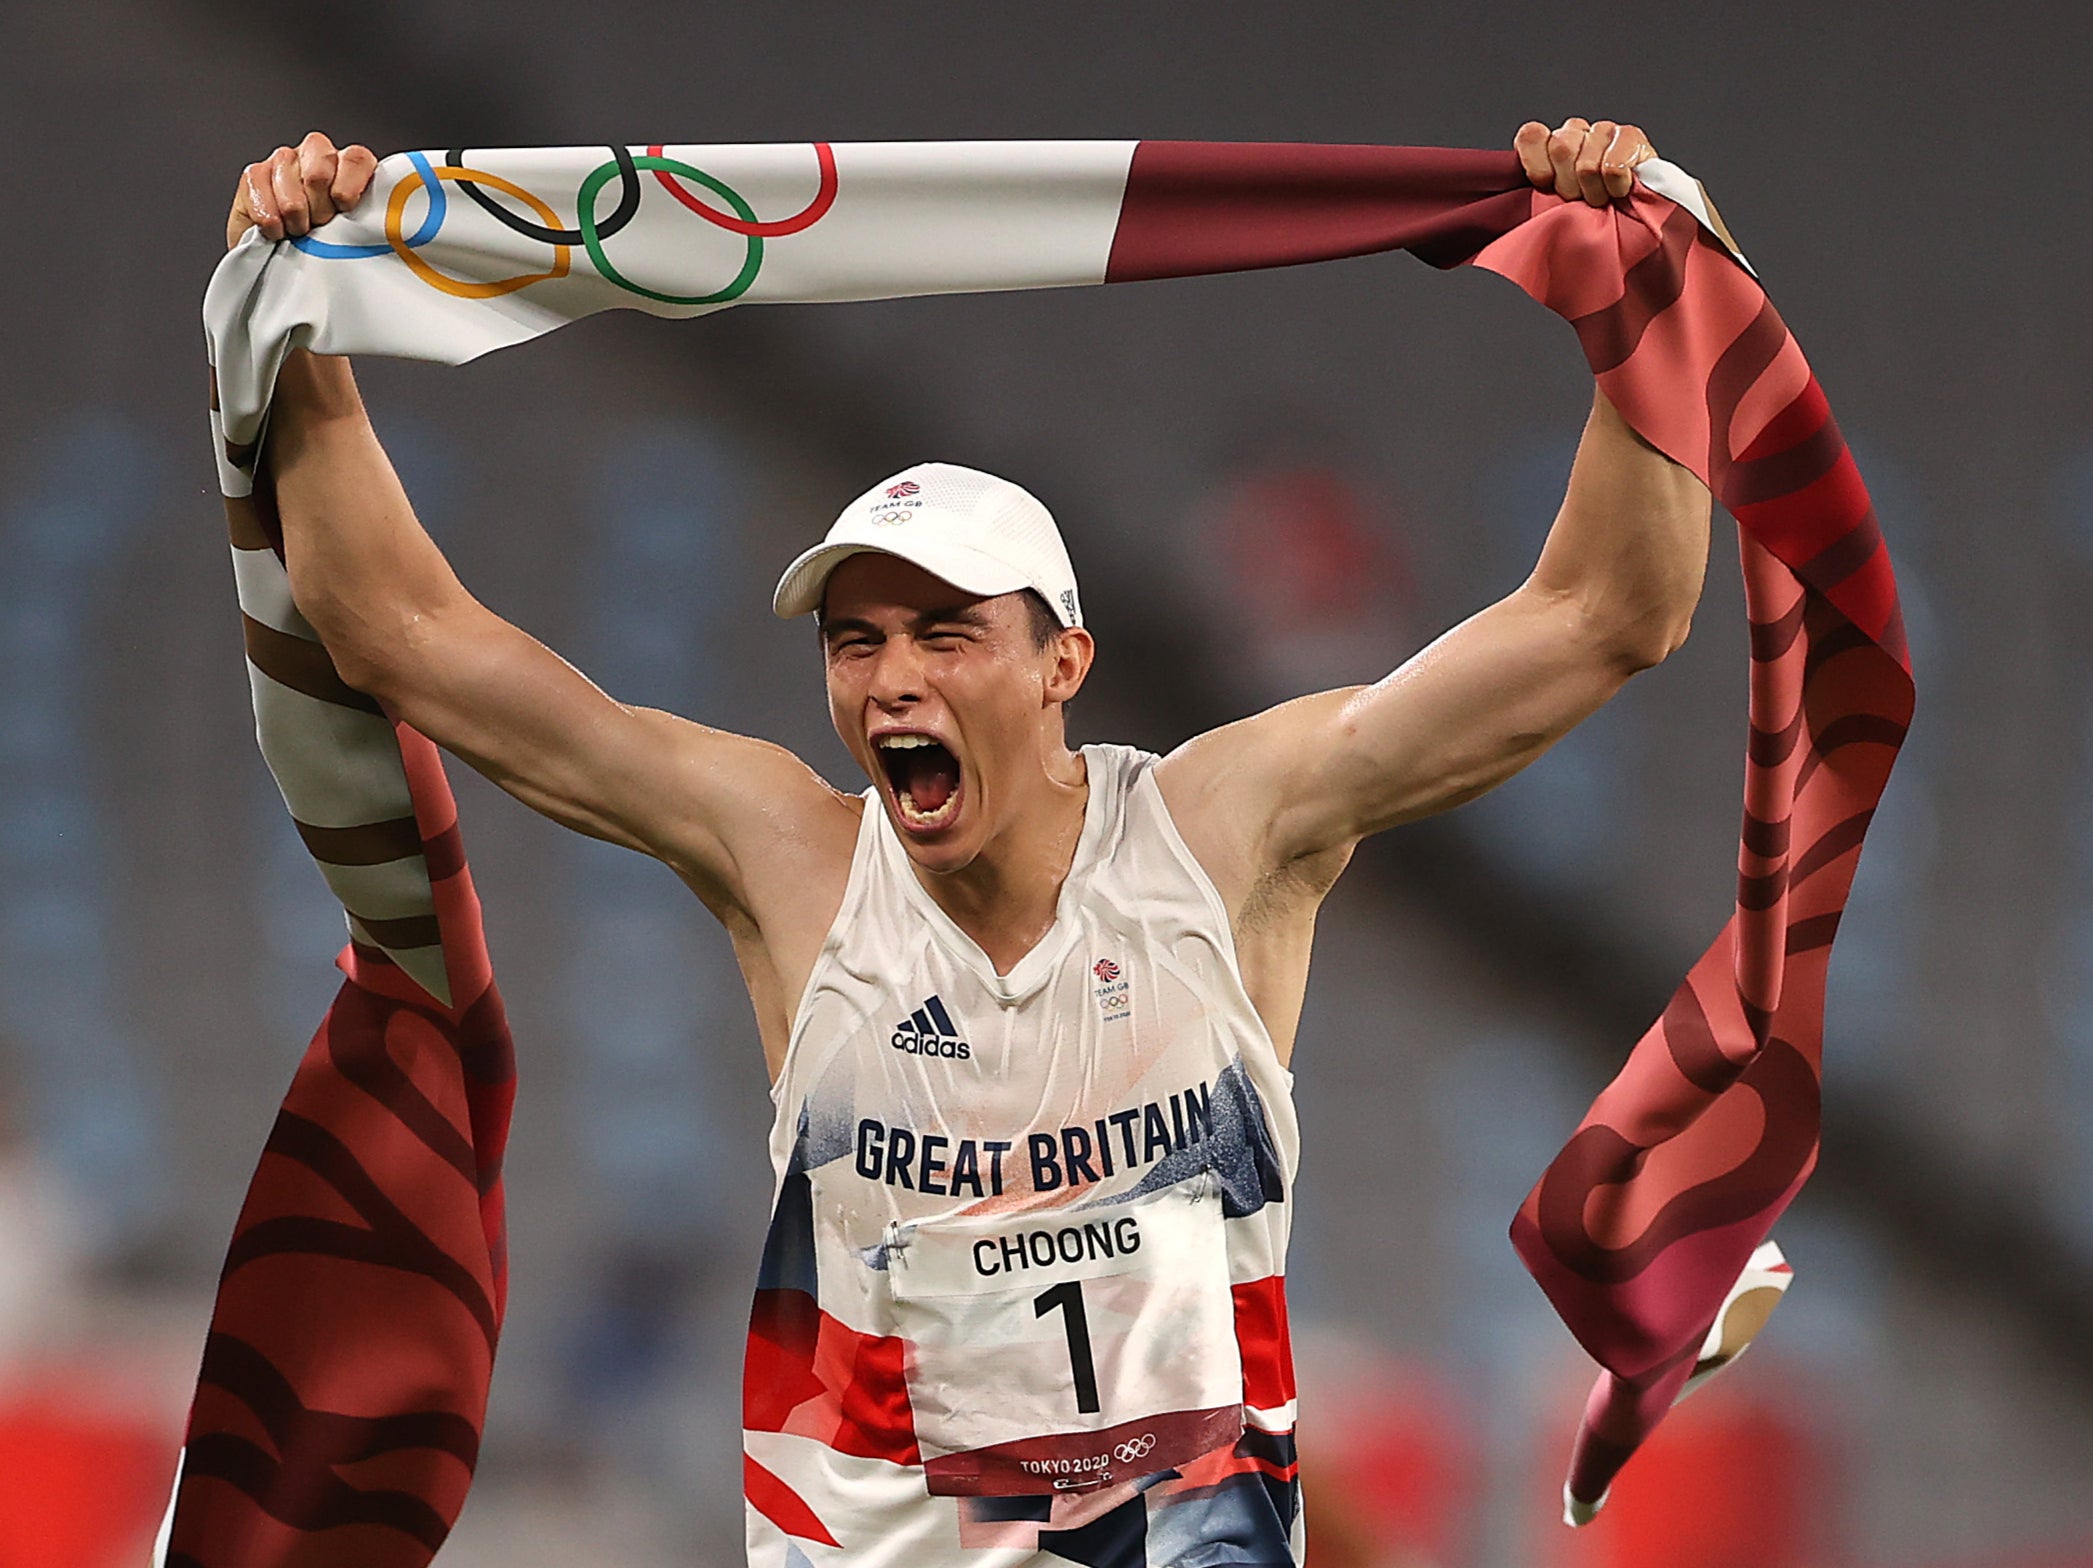 Joseph Choong celebrates after winning Olympic gold